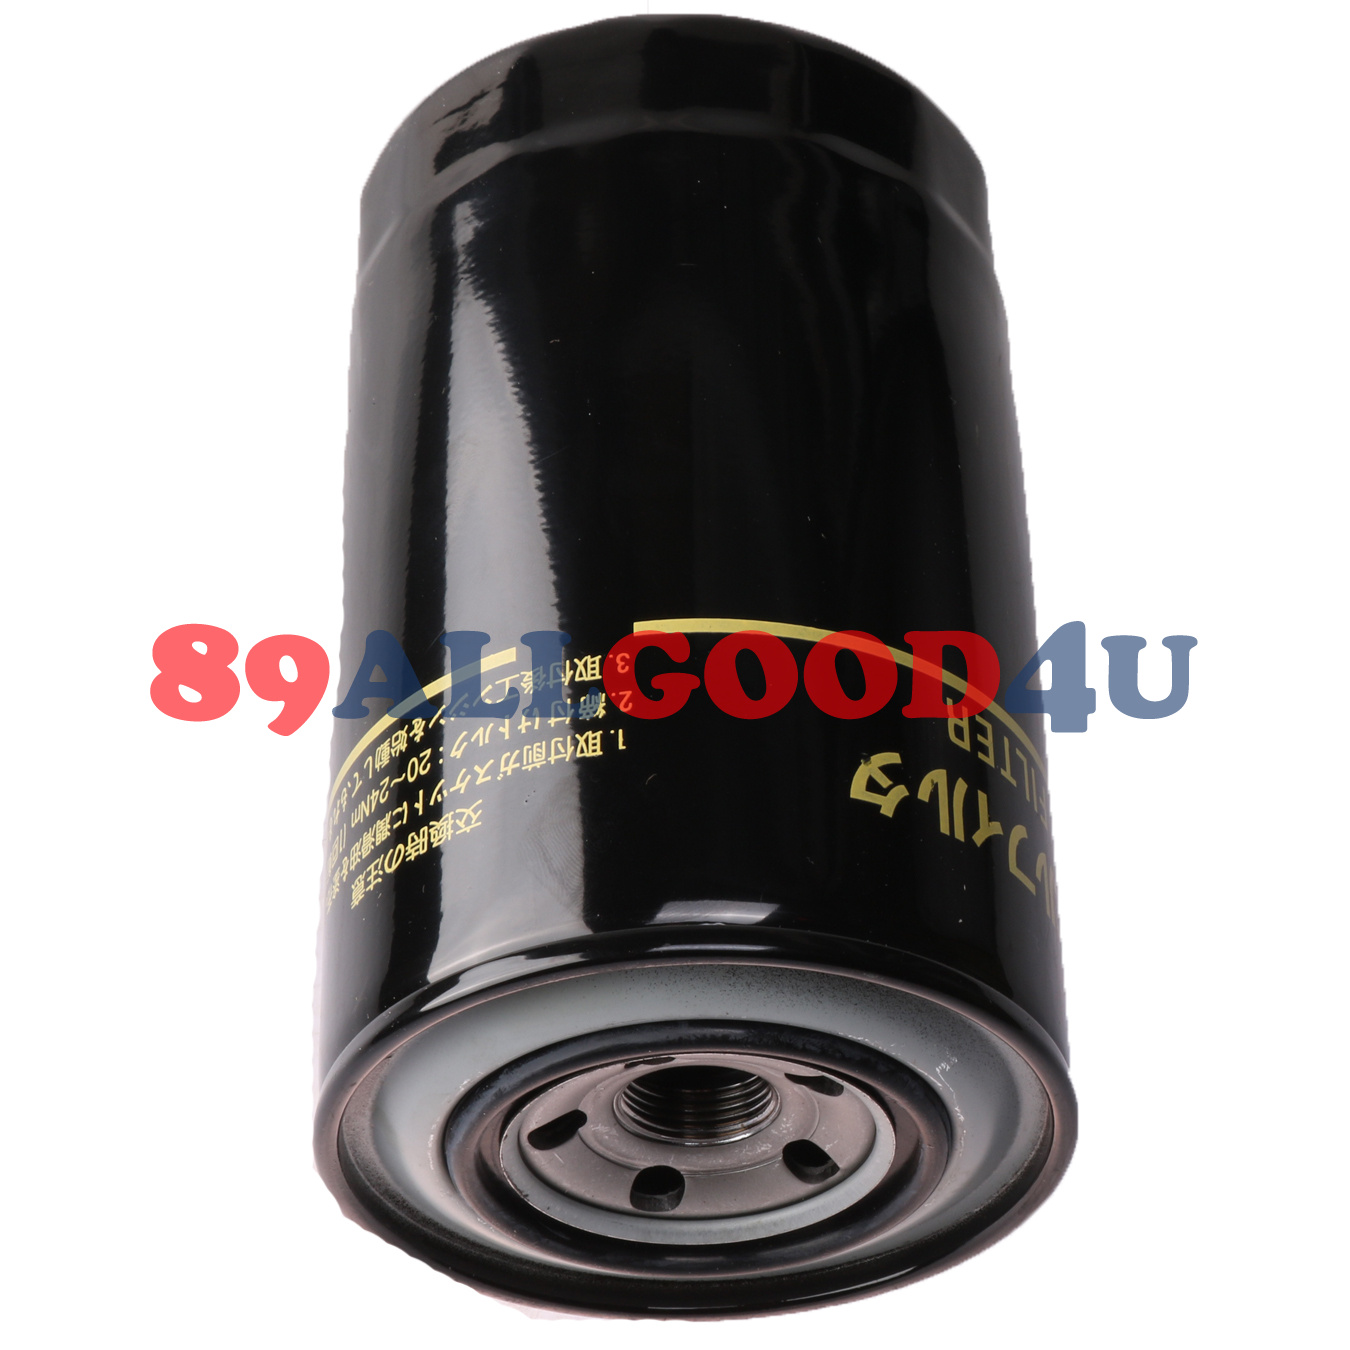 119802-55810 119802-55801 Fuel Filter For Yanmar- DONALDSON P550127 | eBay